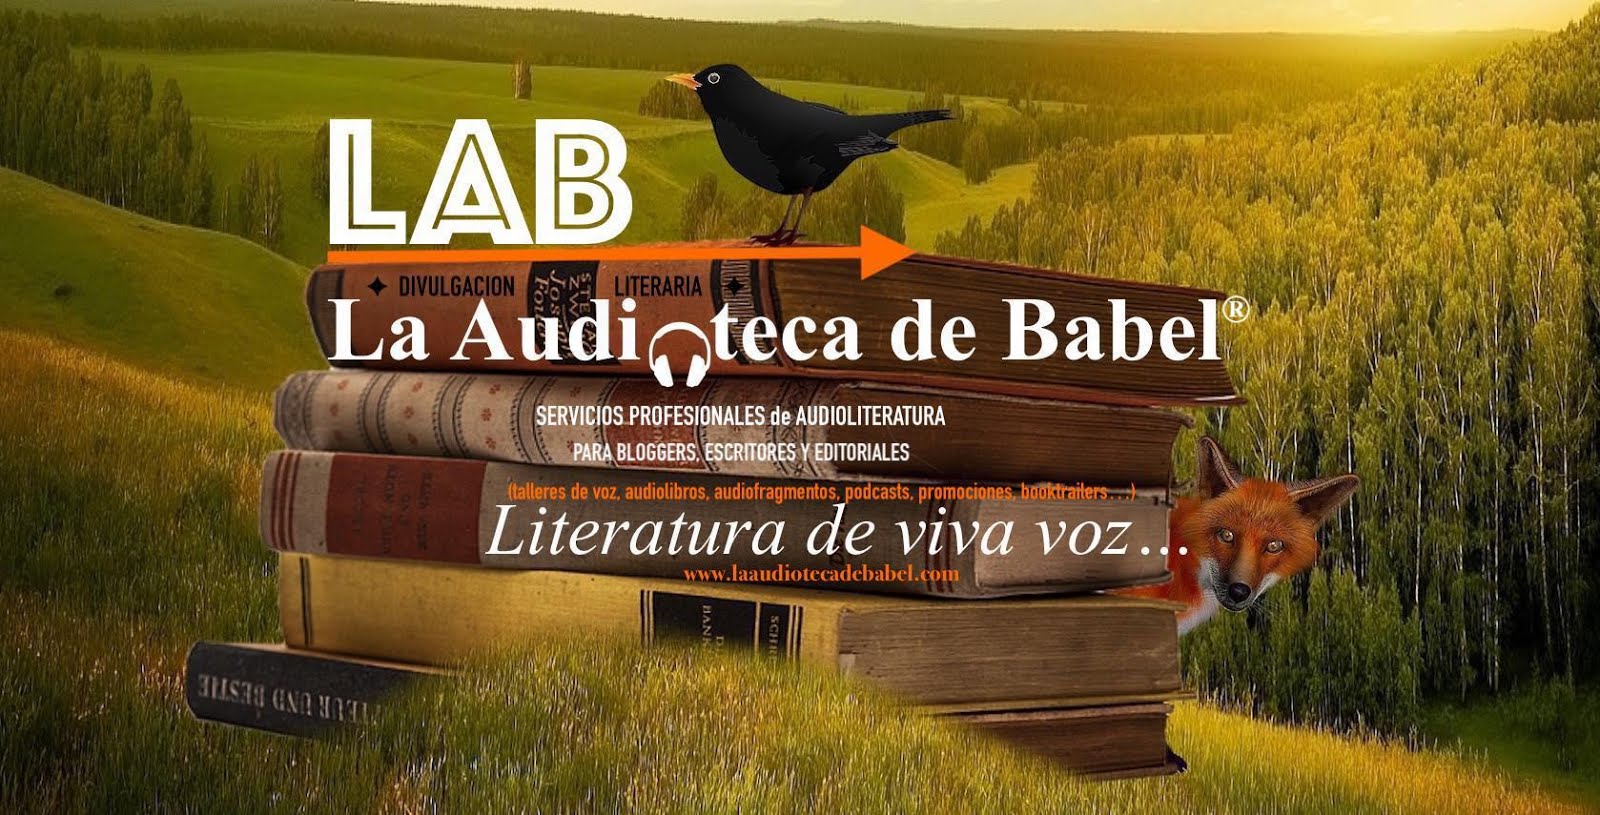 LAB La Audioteca de Babel